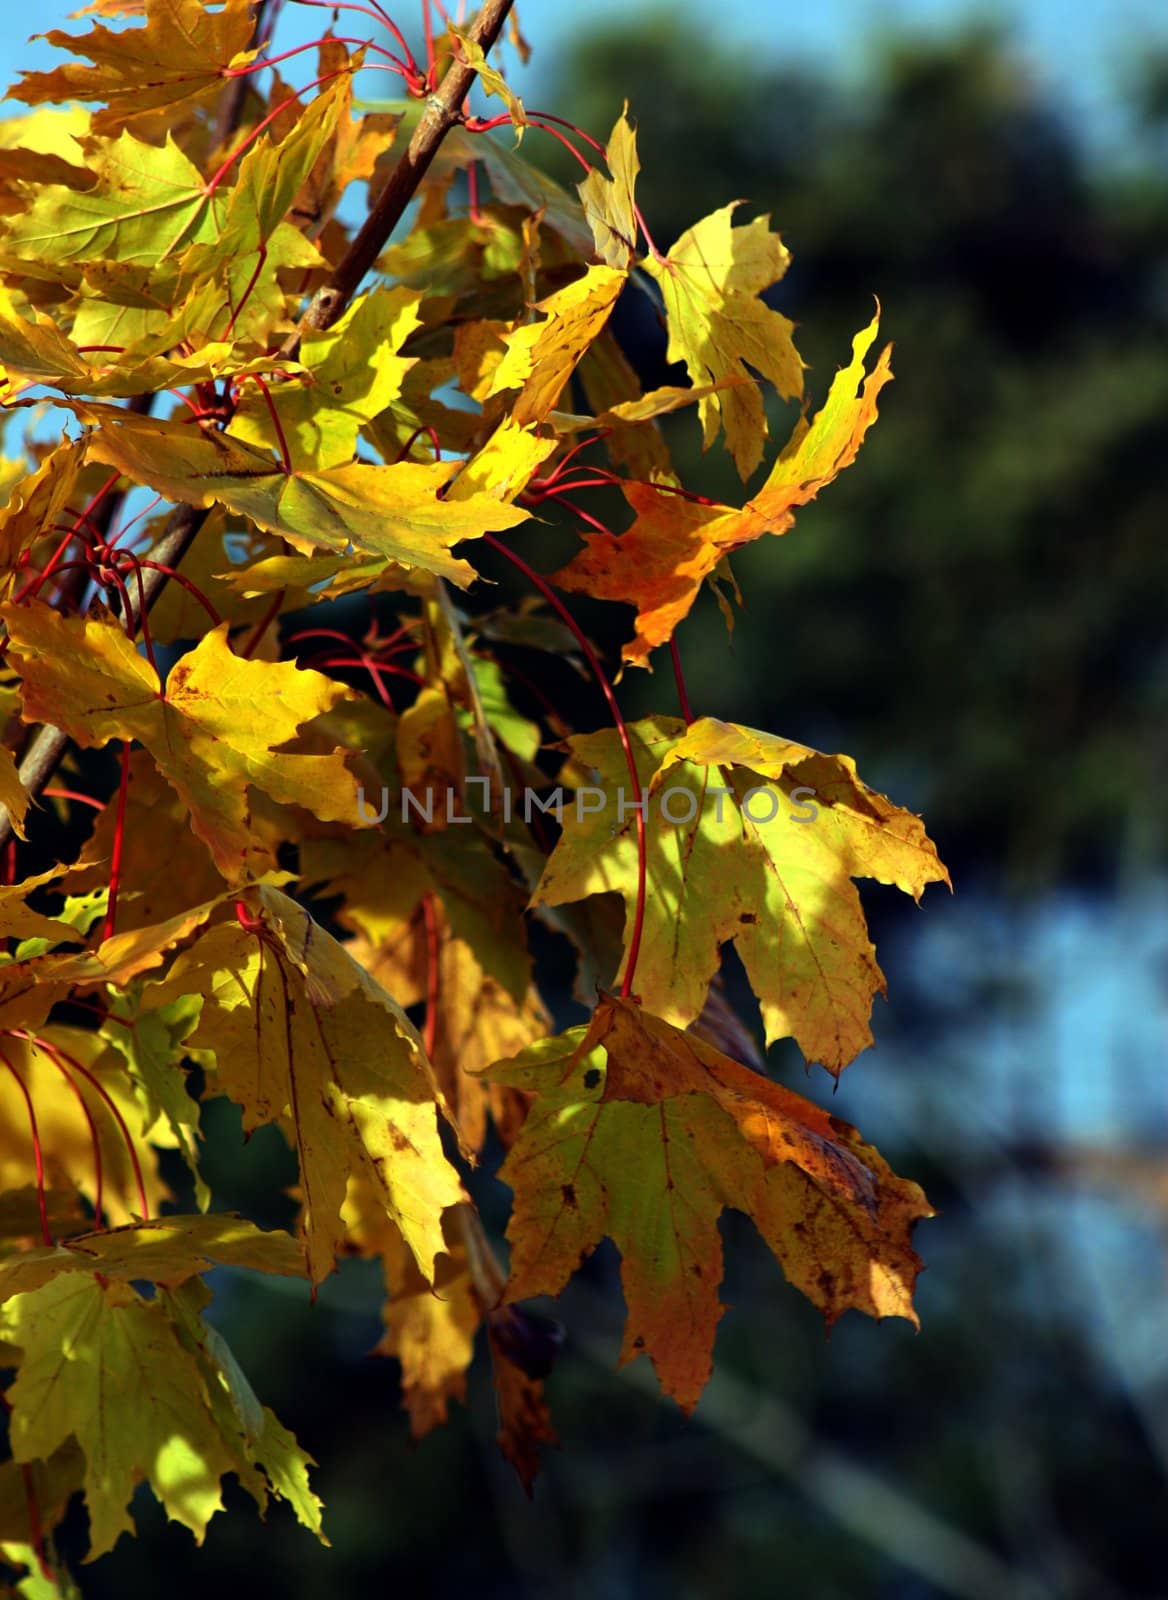 Dense maple leafs yellow in autumn